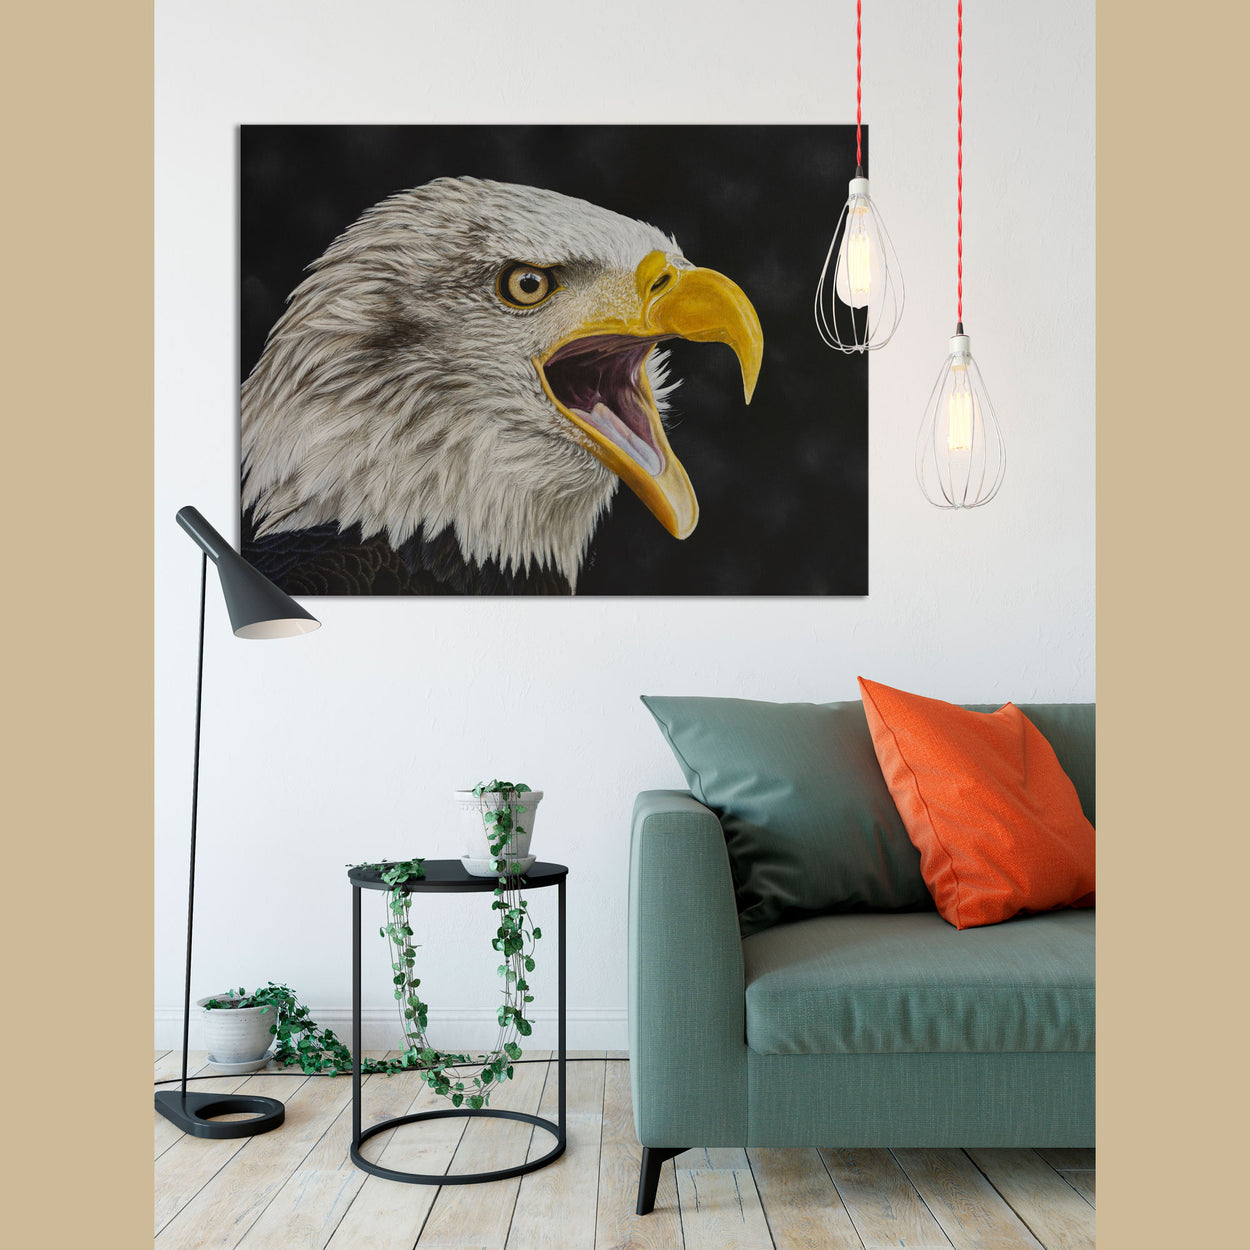 Bald Eagle Painting on Wall - Jill Dimond - Bird art